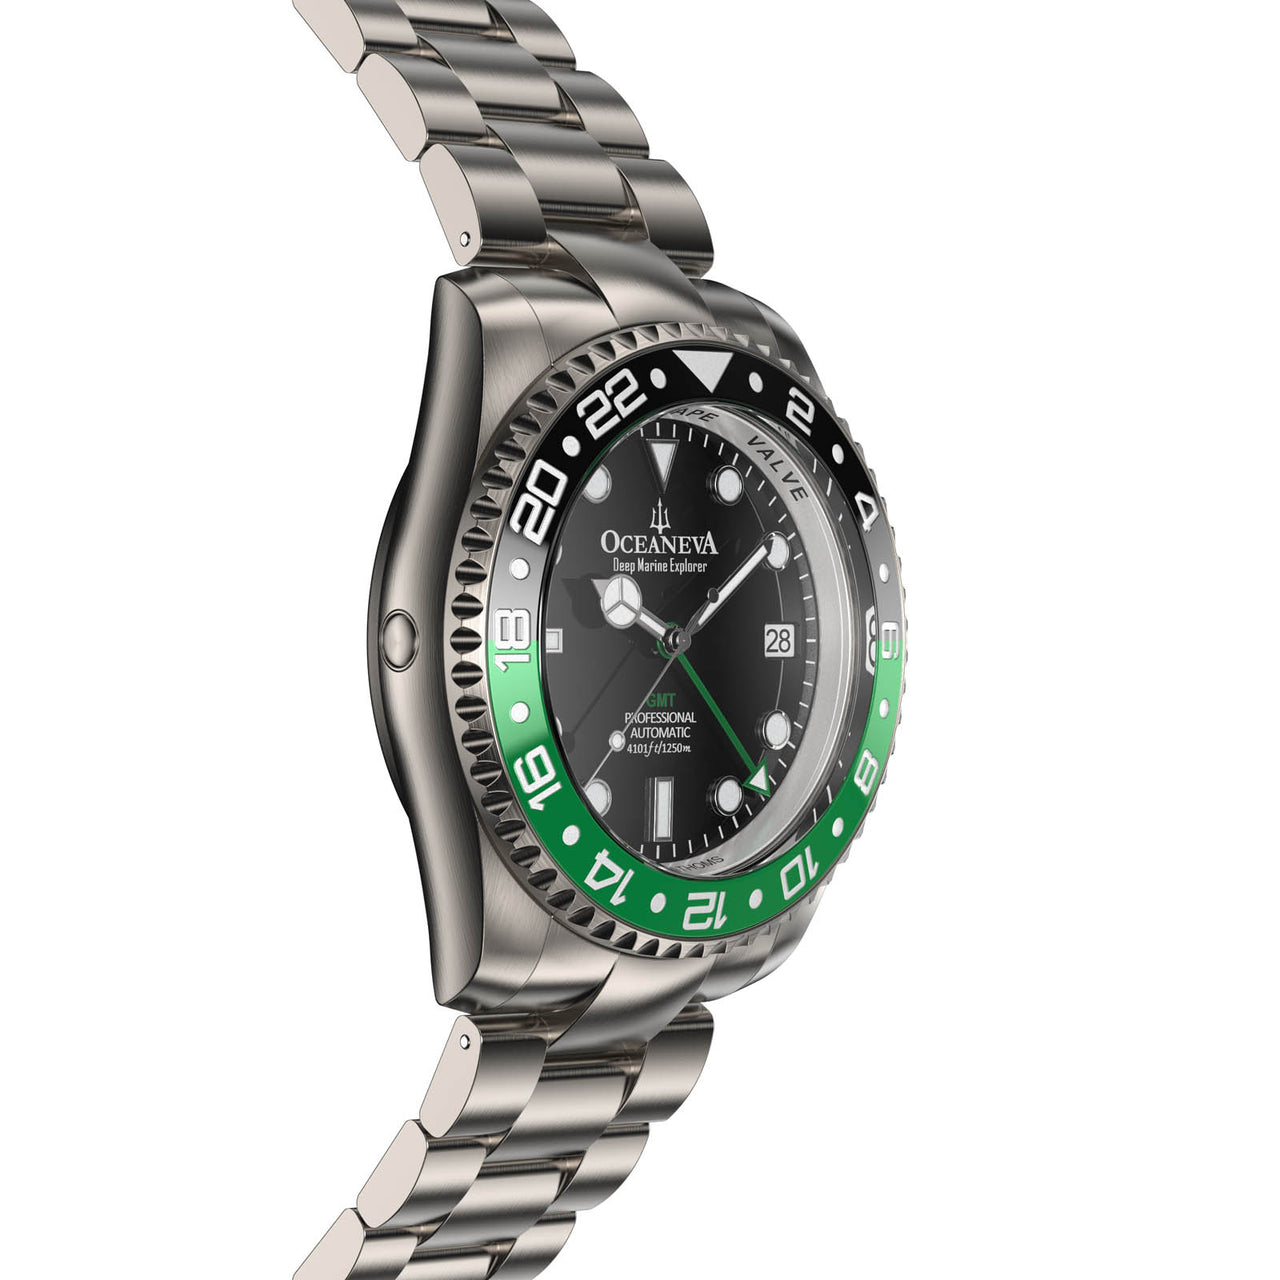 Highly water-resistant Oceaneva Titanium Diver Watch with Helium Escape Valve